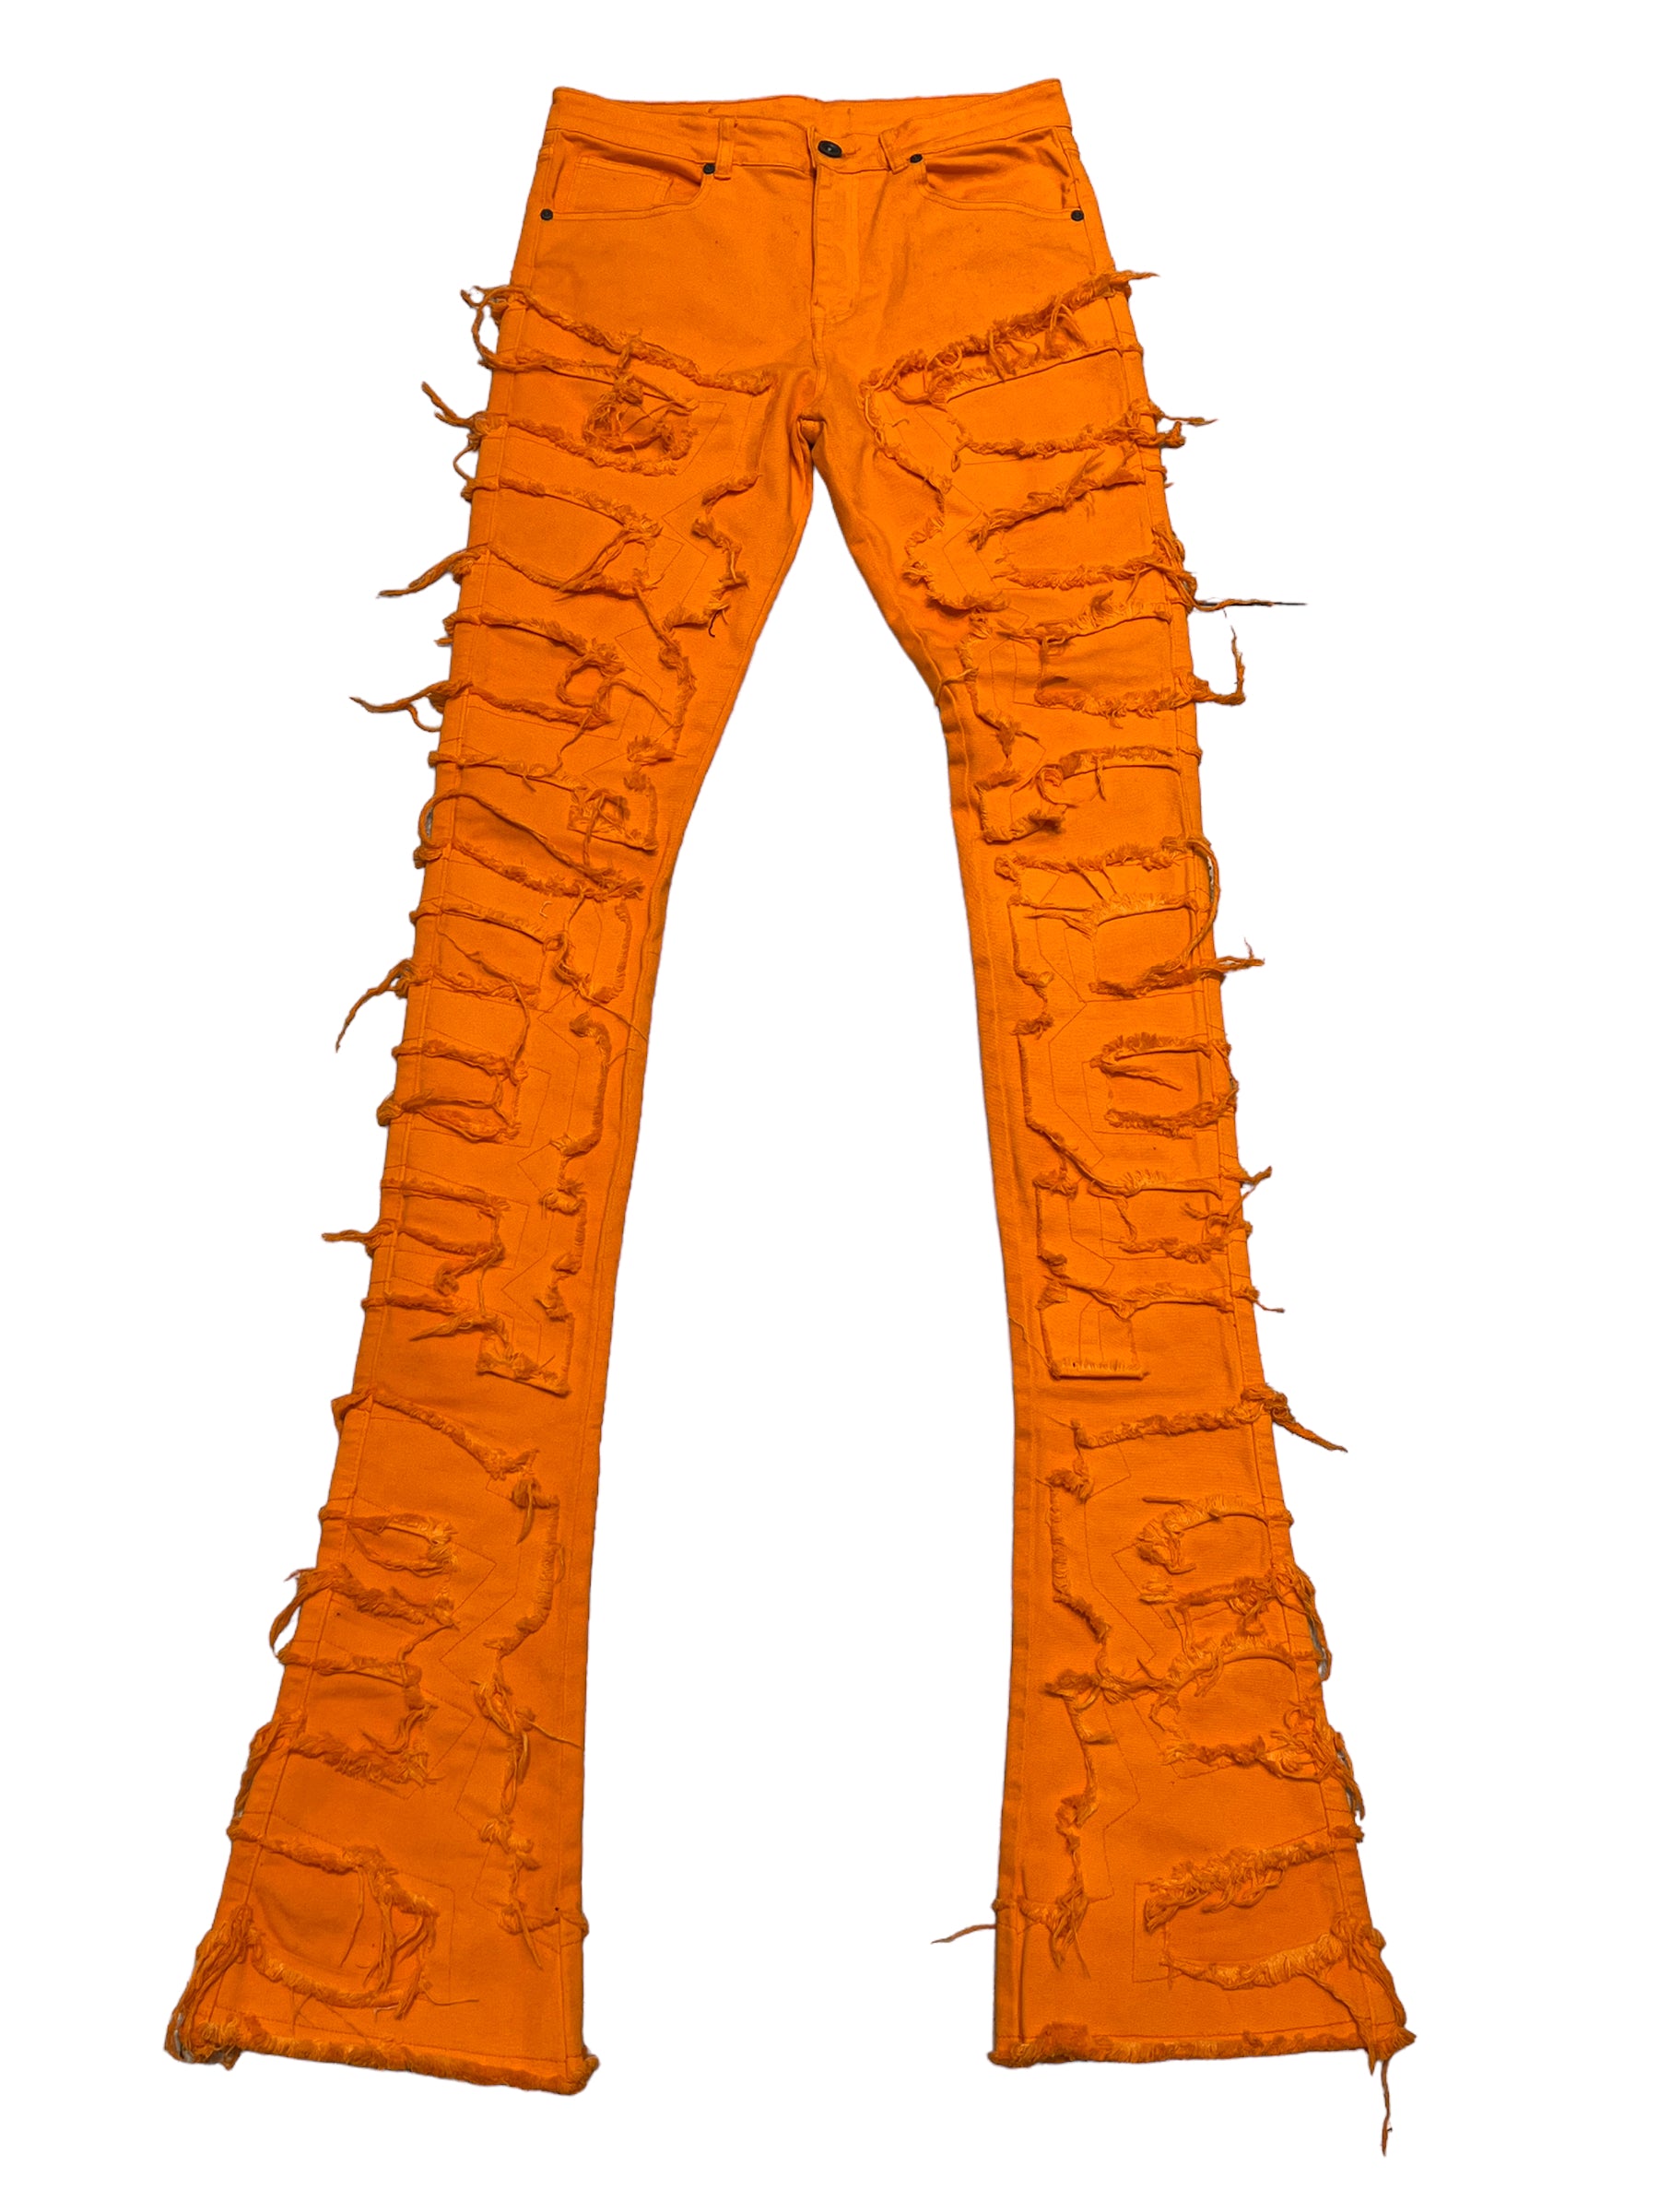 Stacked Denim Malik Dupri Jeans – Orange